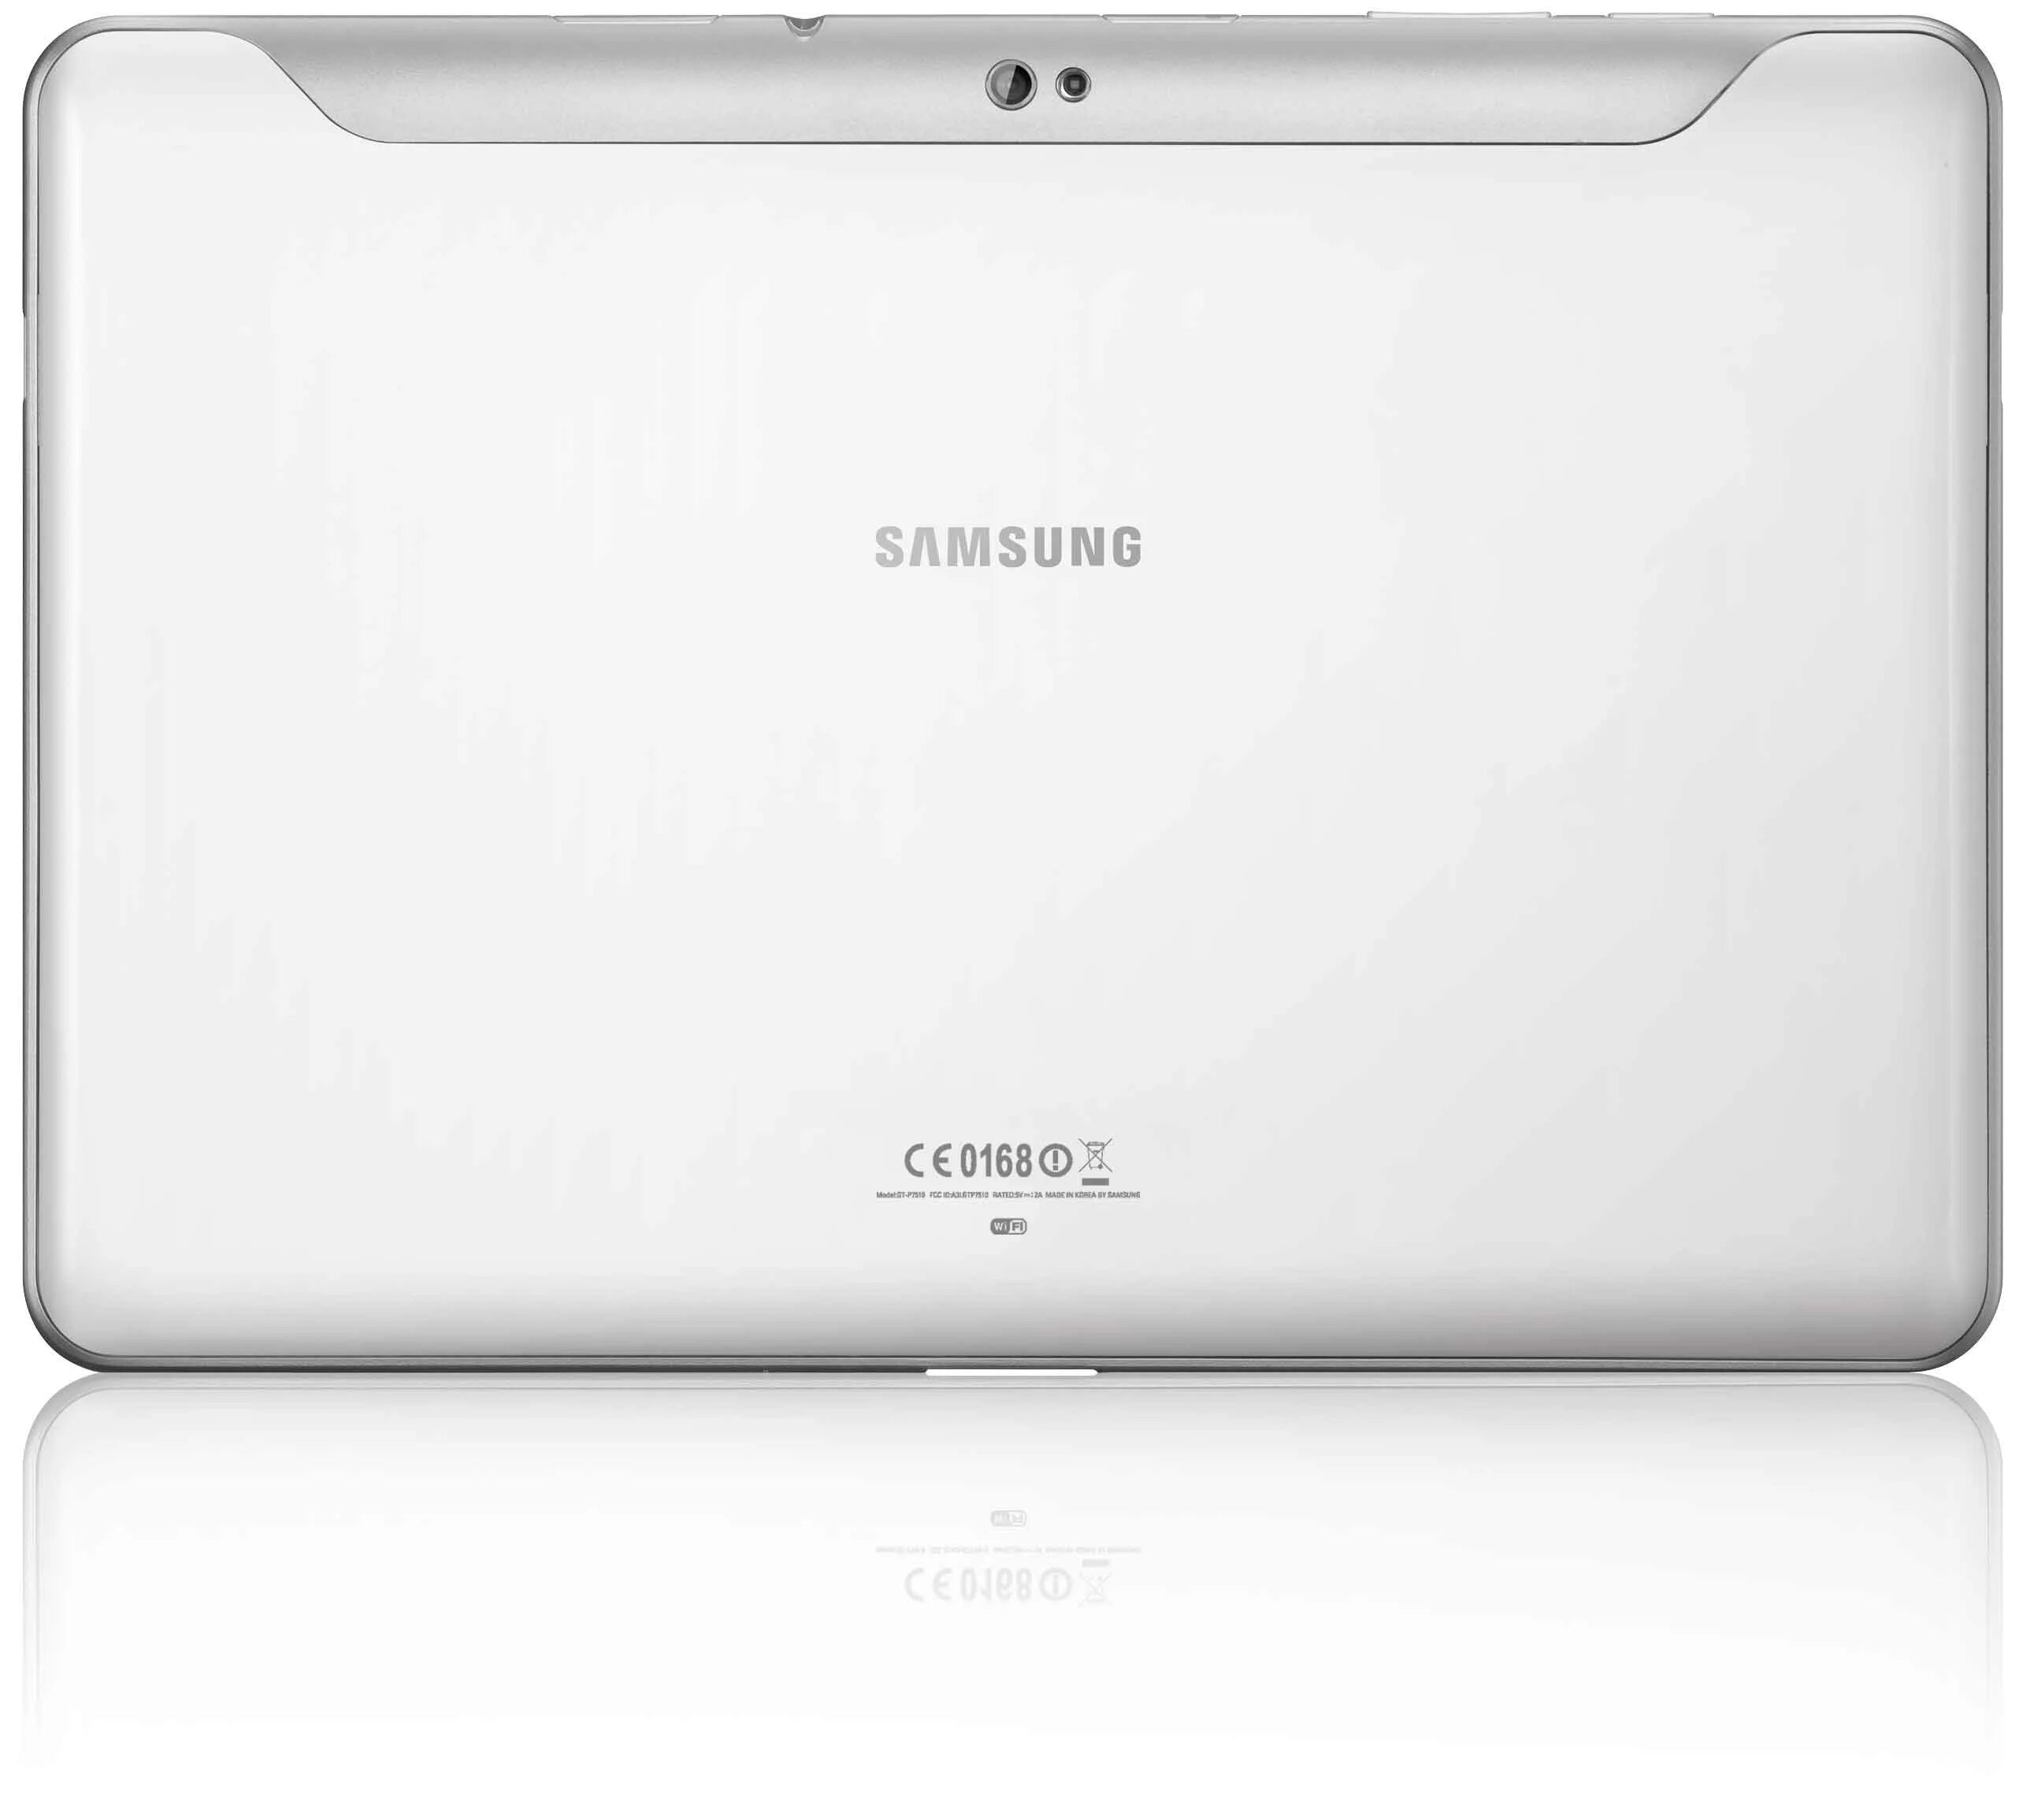 Samsung 10 2. Планшет Samsung Galaxy Tab 2 10.1. Samsung Galaxy Tab 10.1. Планшет самсунг таб 2. Samsung Galaxy Tab 2 16 GB.